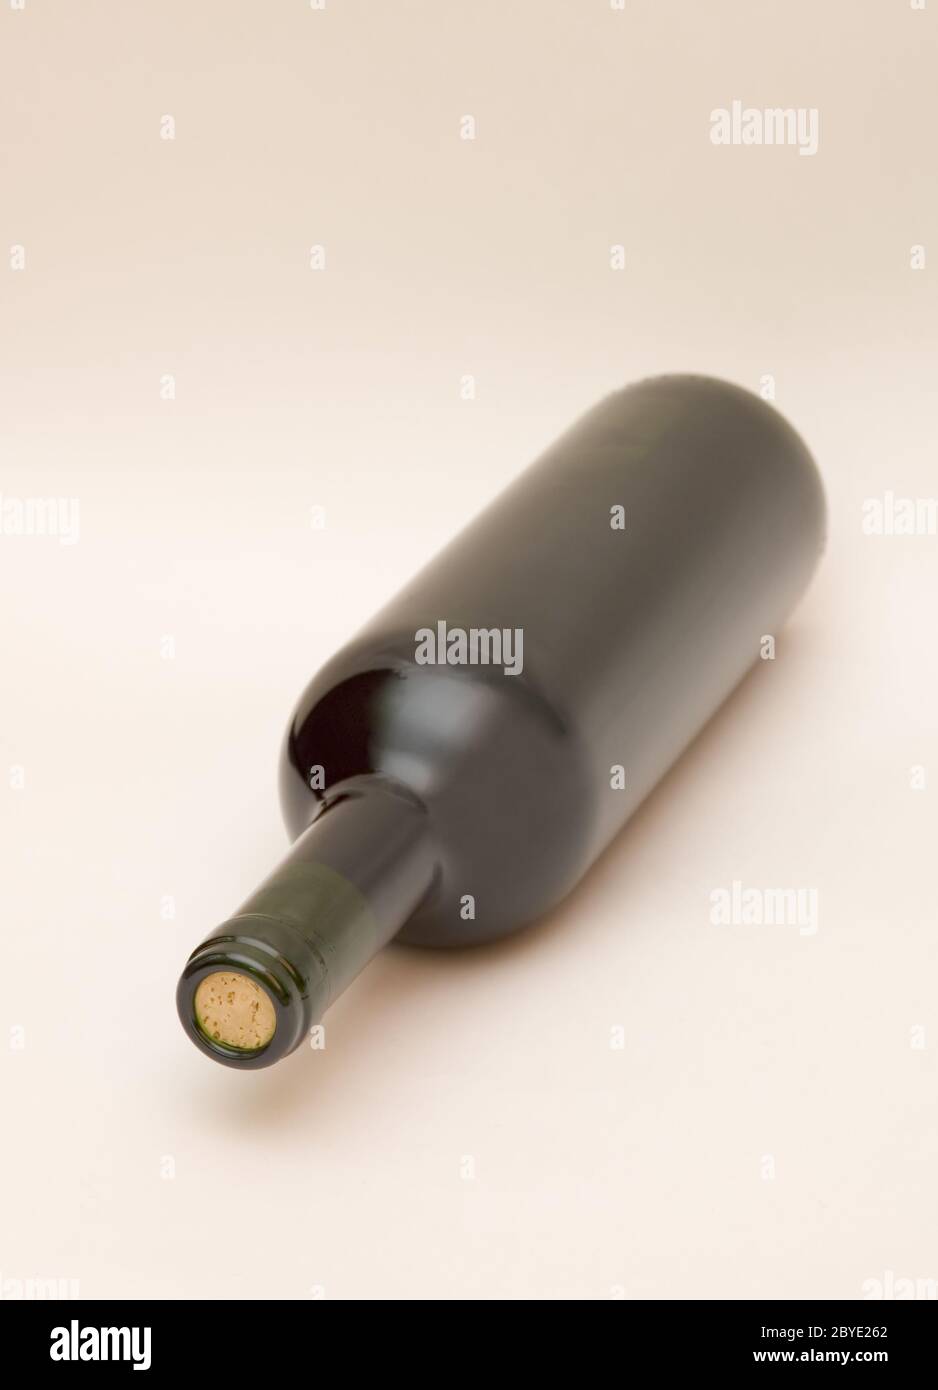 wine bottle Stock Photo